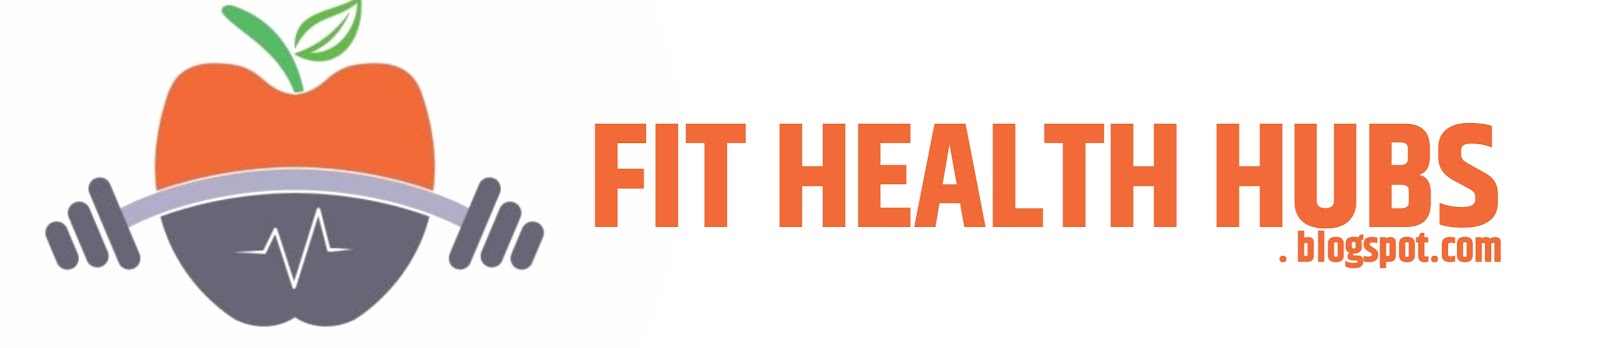 Fit health hubs